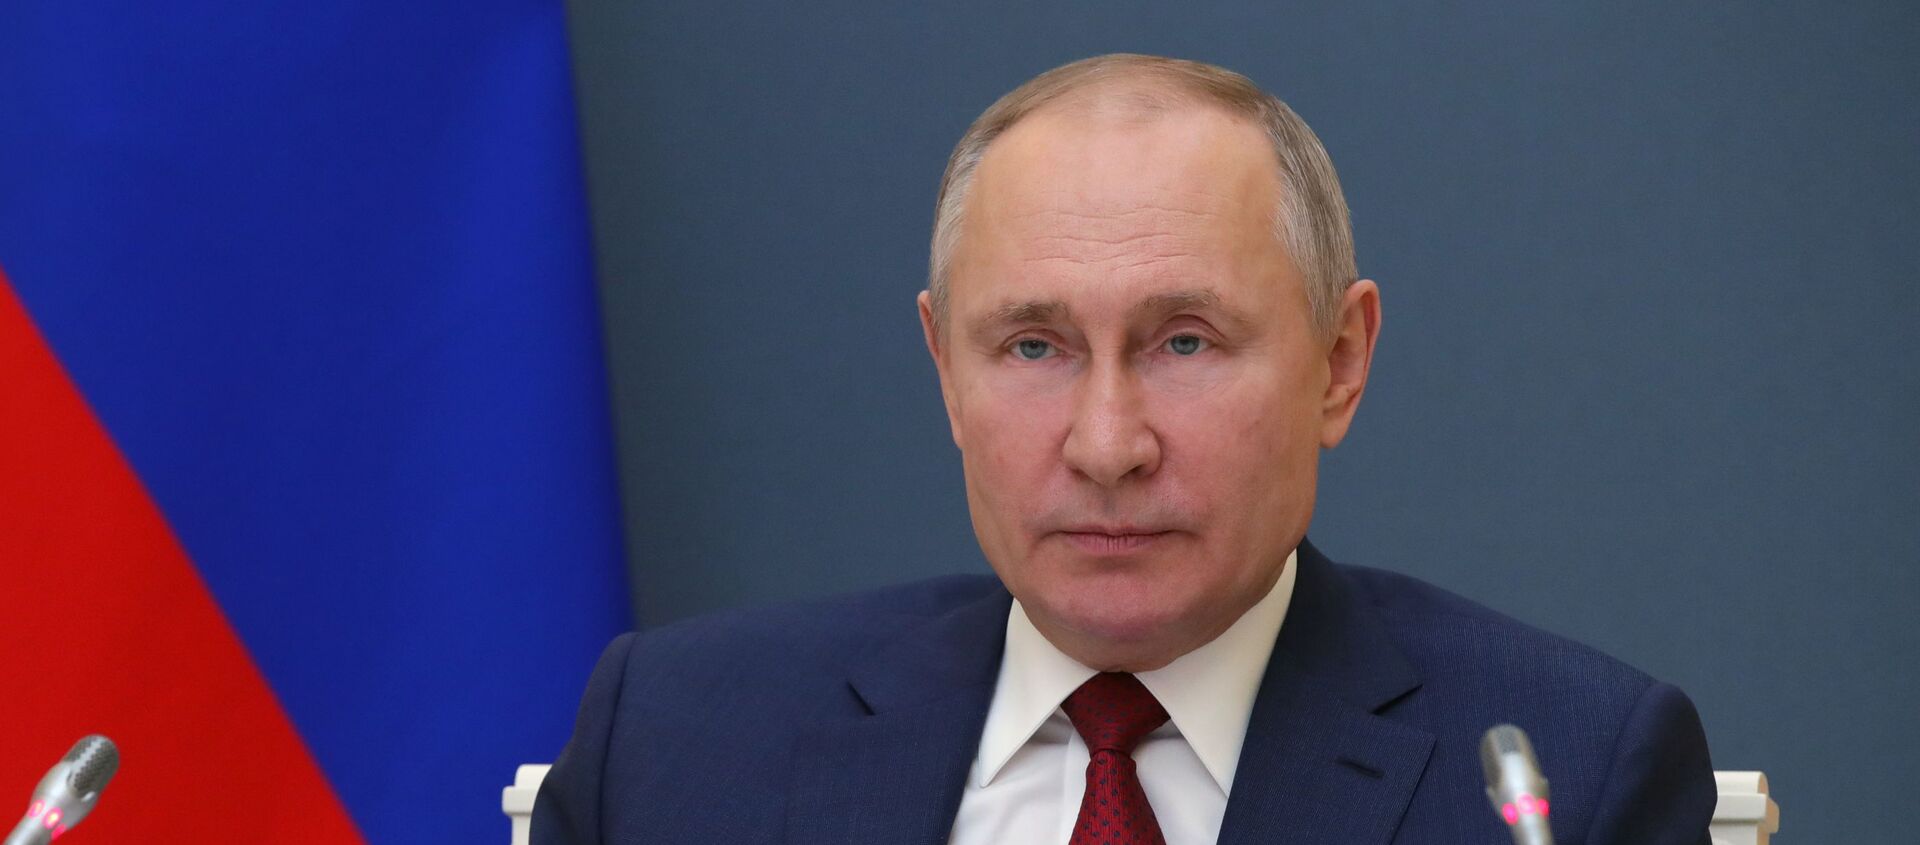 Президент РФ В. Путин выступил на сессии онлайн-форума Давосская повестка дня 2021 - Sputnik Армения, 1920, 27.01.2021